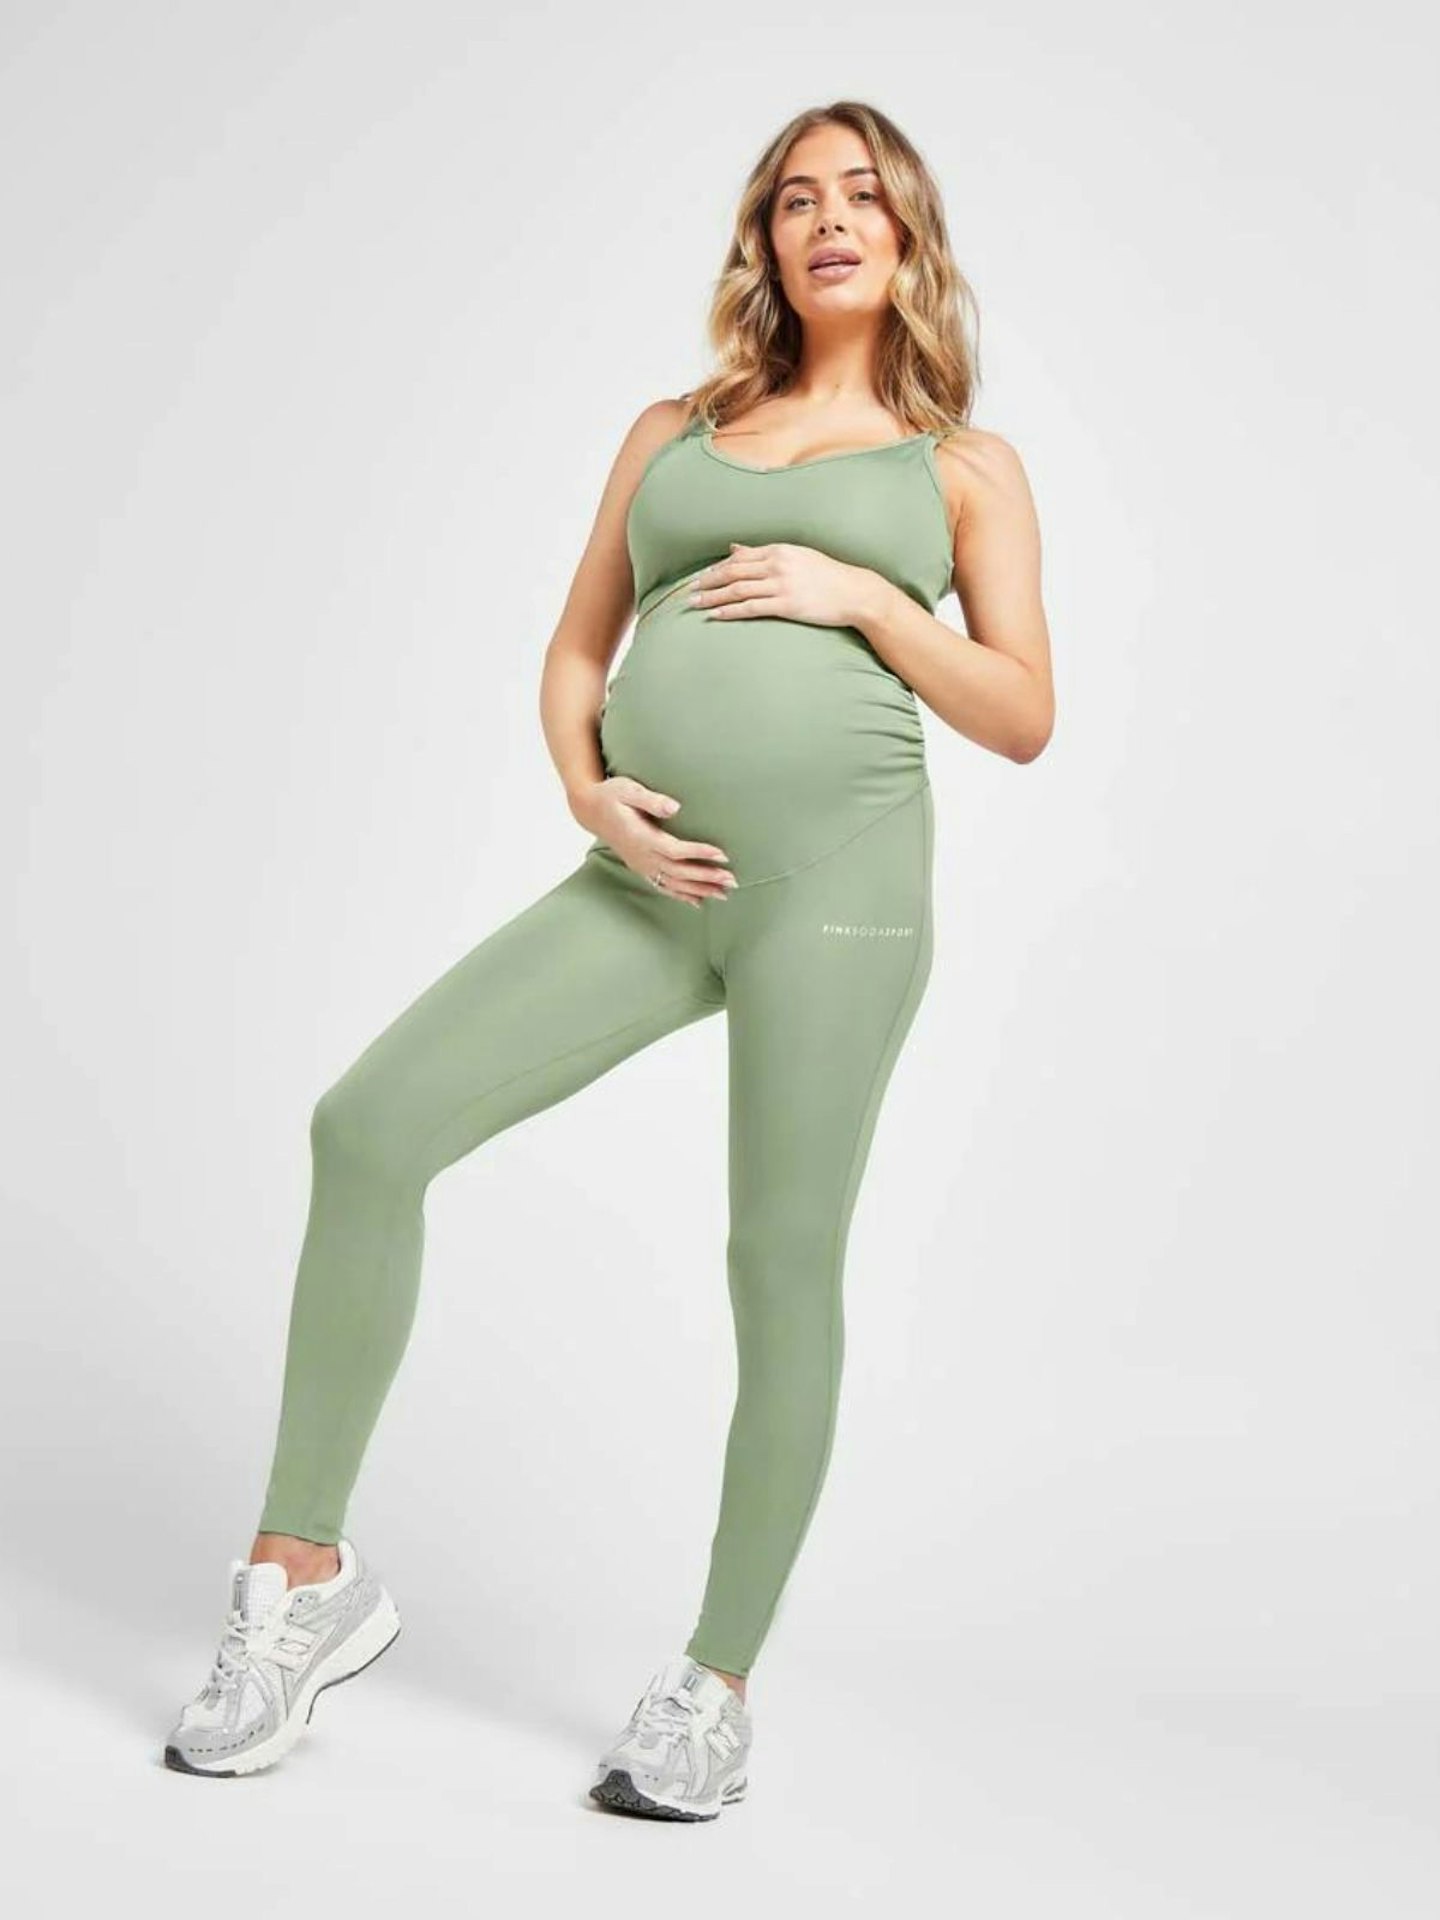 Ultimate Maternity Leggings Review - The Best Maternity Leggings